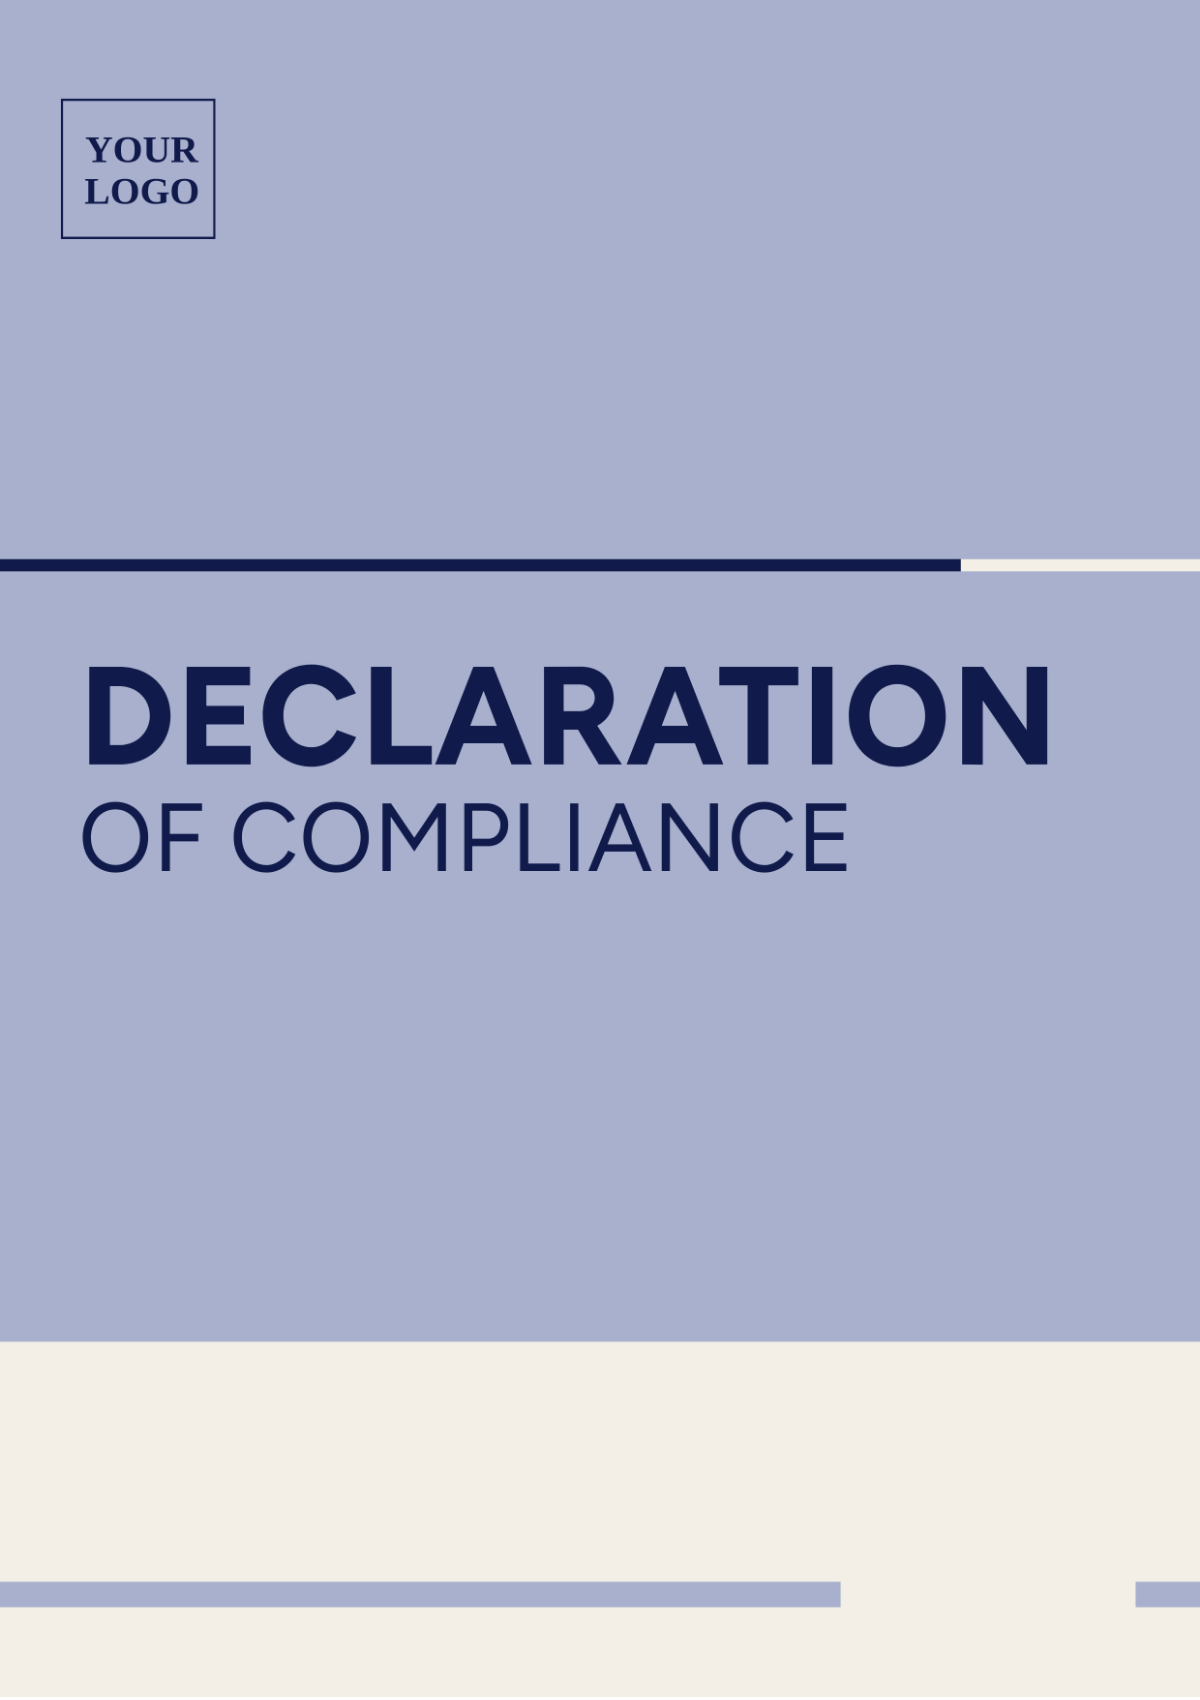 Declaration Of Compliance Template